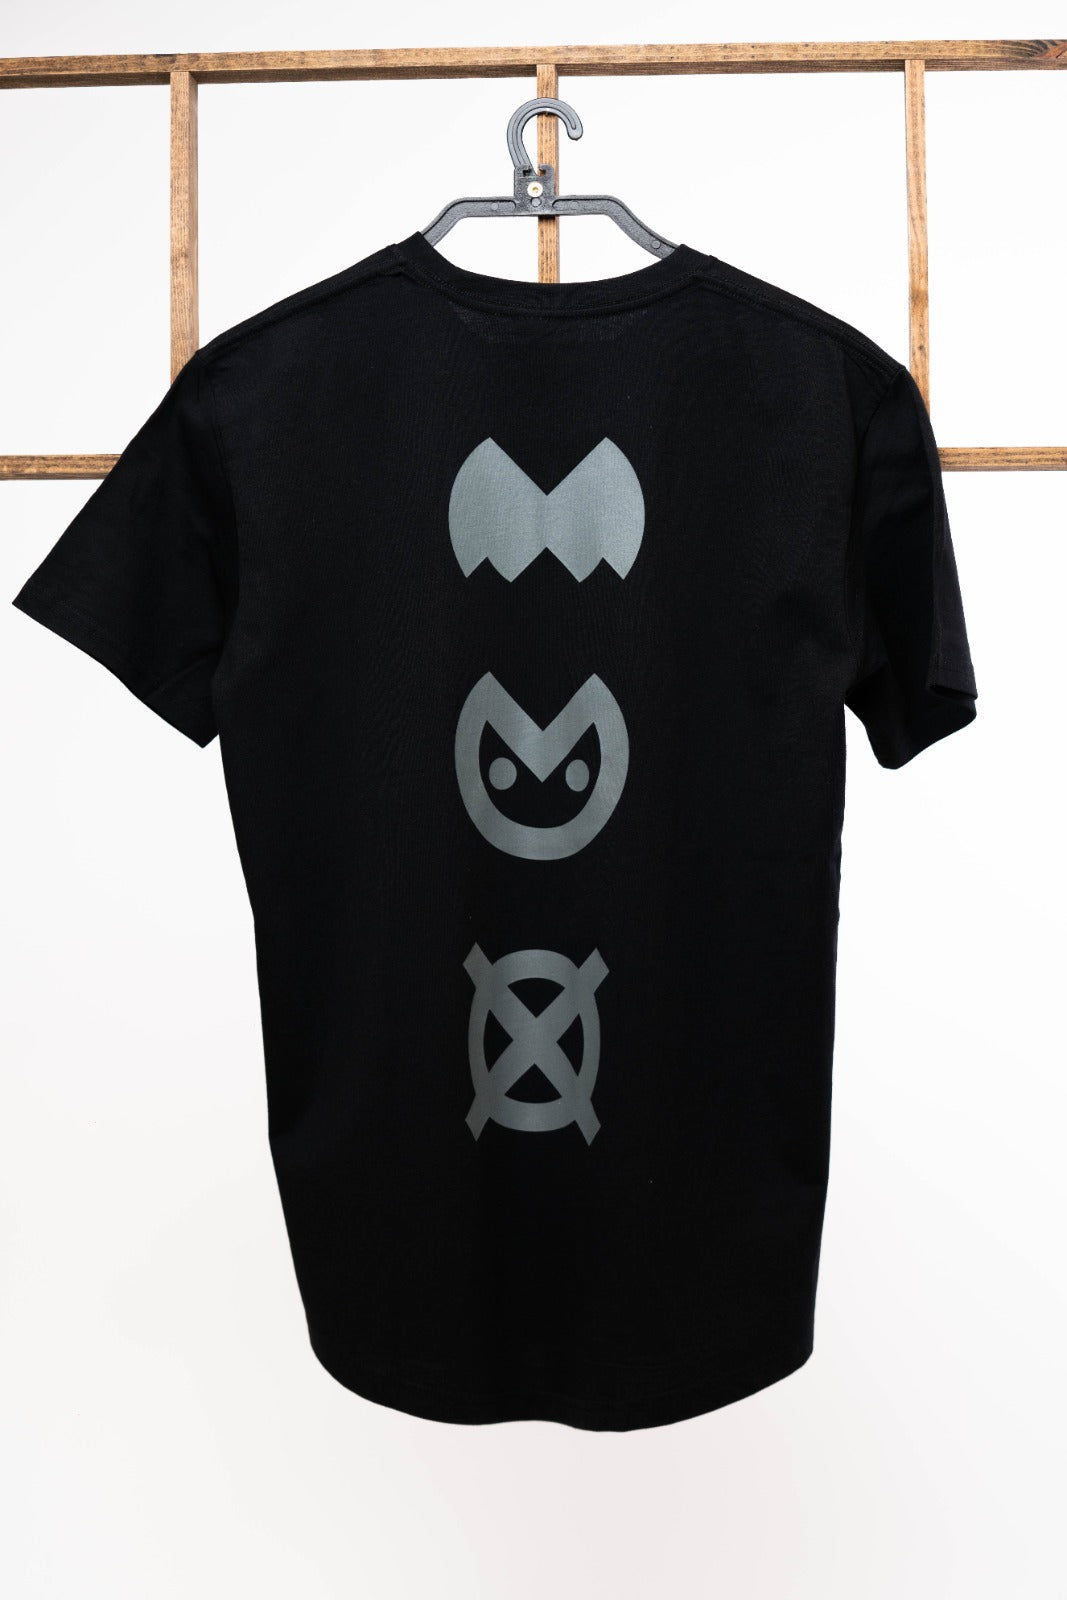 Immortality T-shirt, Fernando Batoni, Zapato3, 3 icons t-shirt